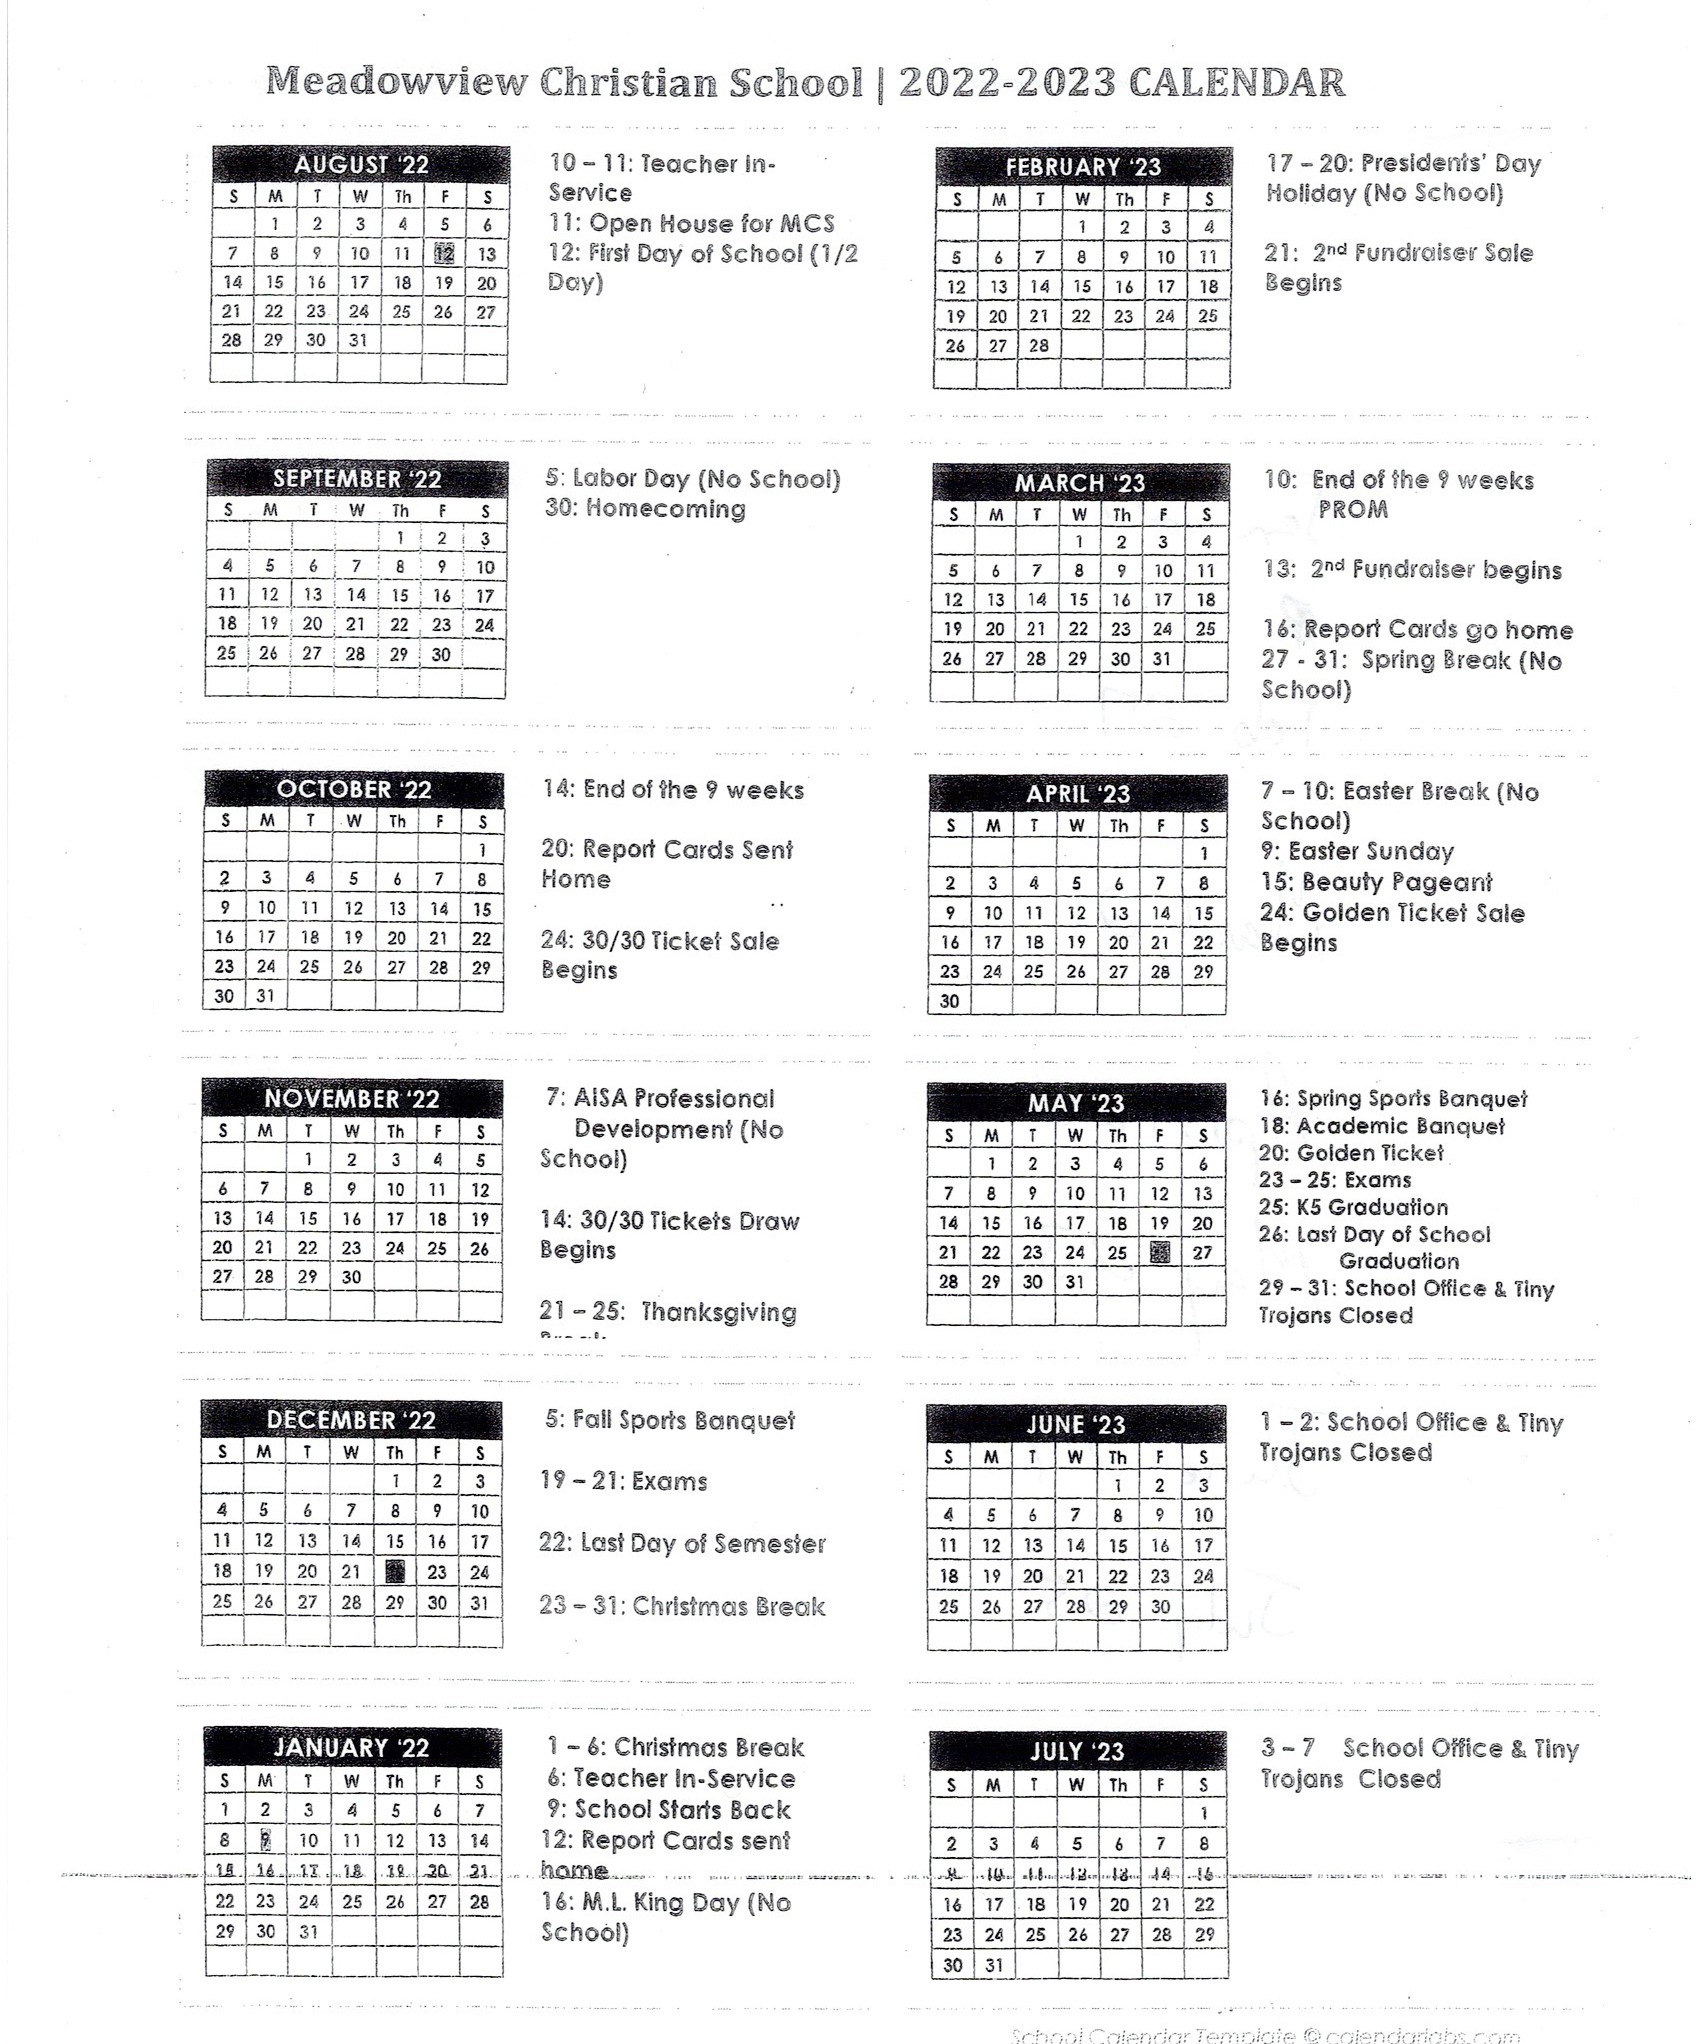 Meadowview Christian School Calendar